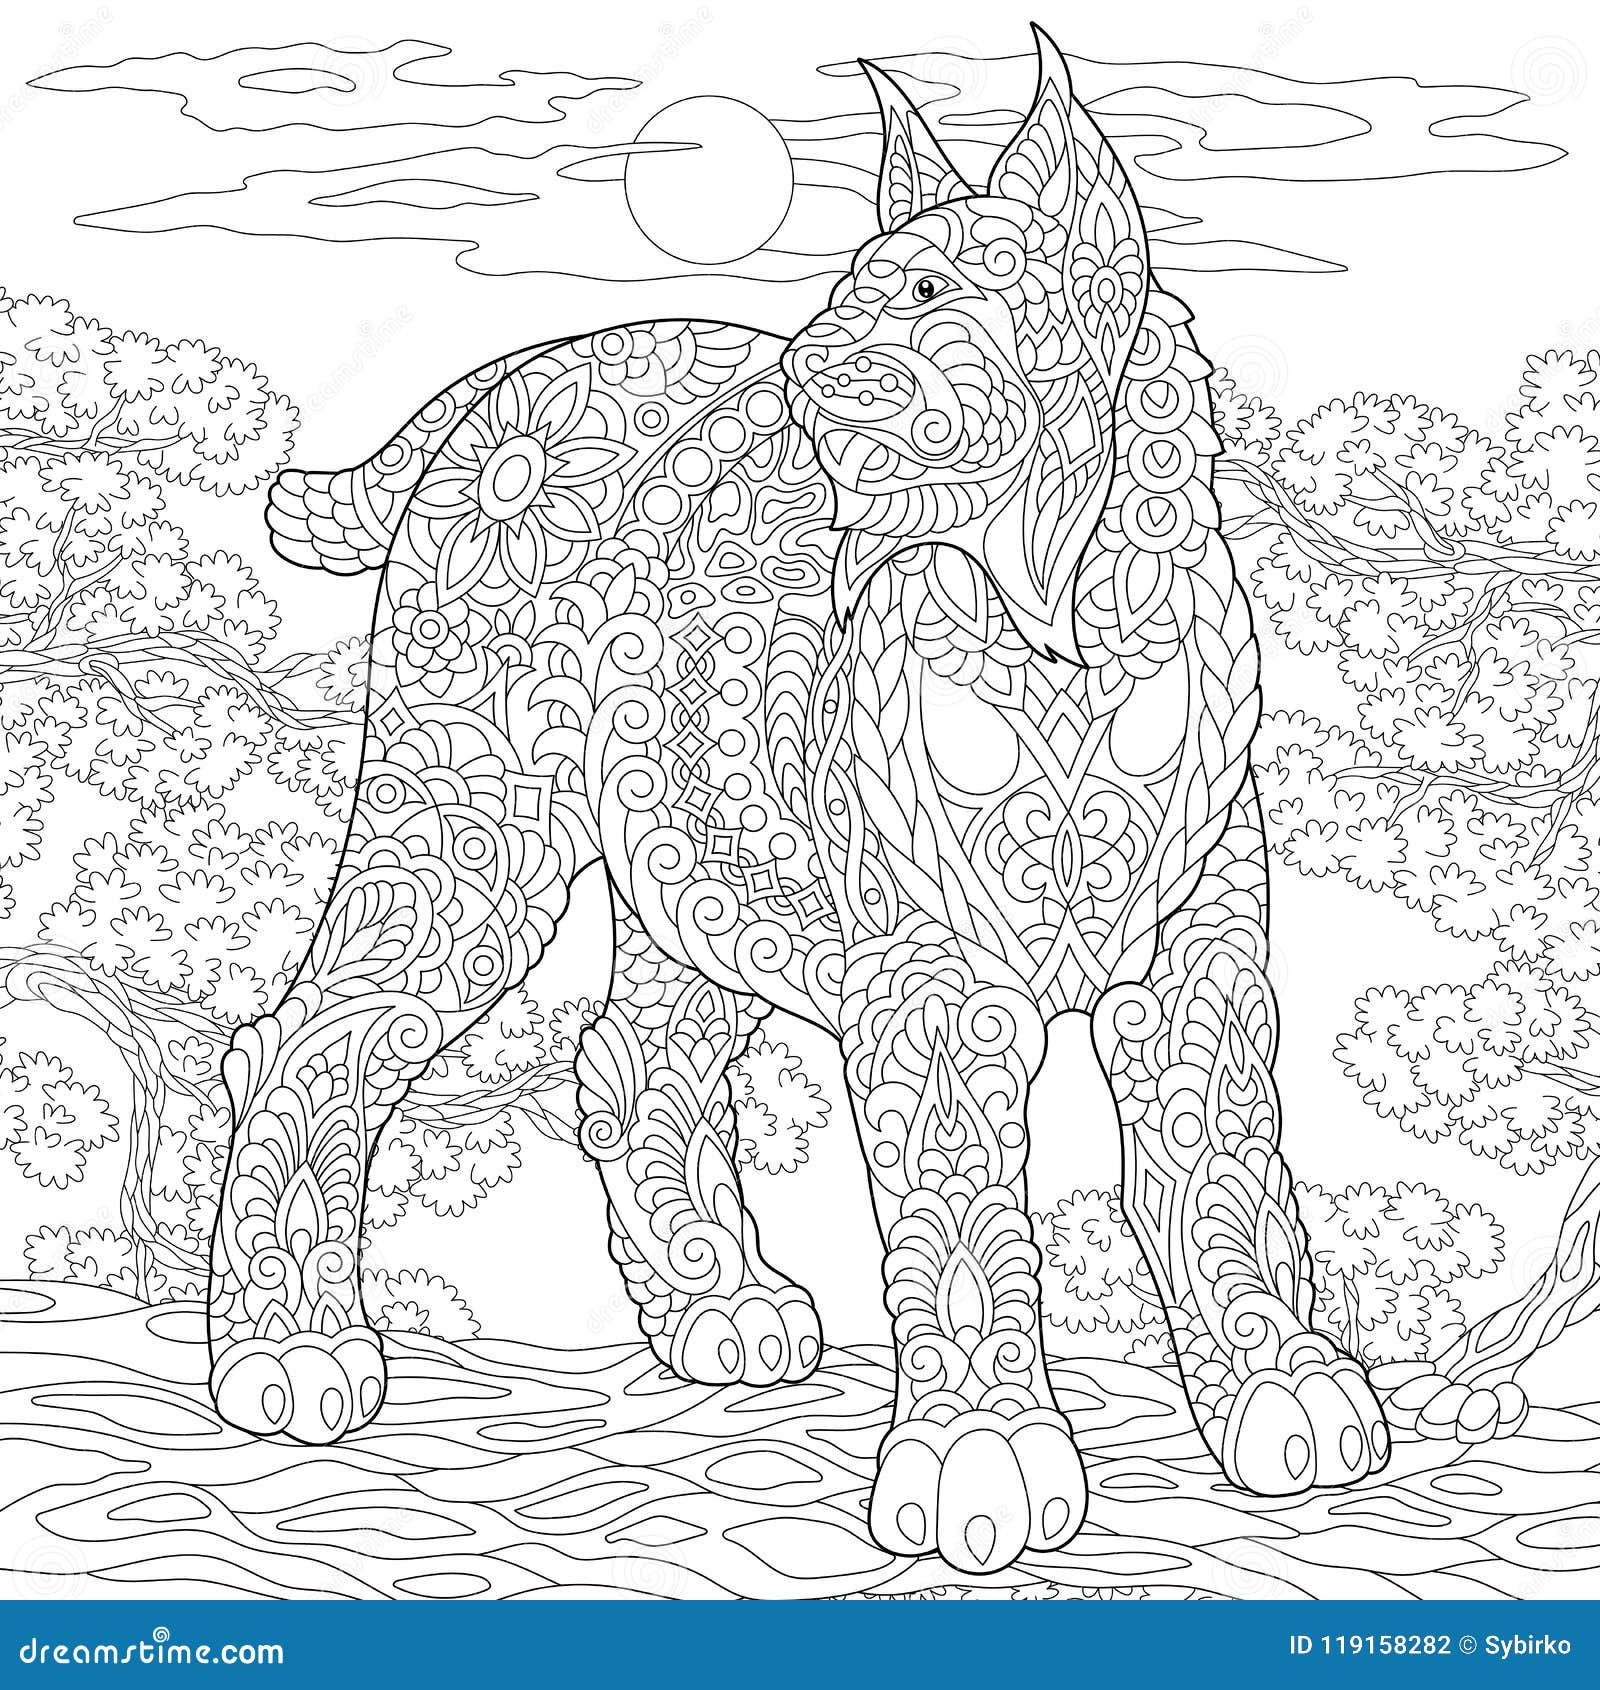 Bobcat Coloring Page Stock Illustrations – 20 Bobcat Coloring Page ...